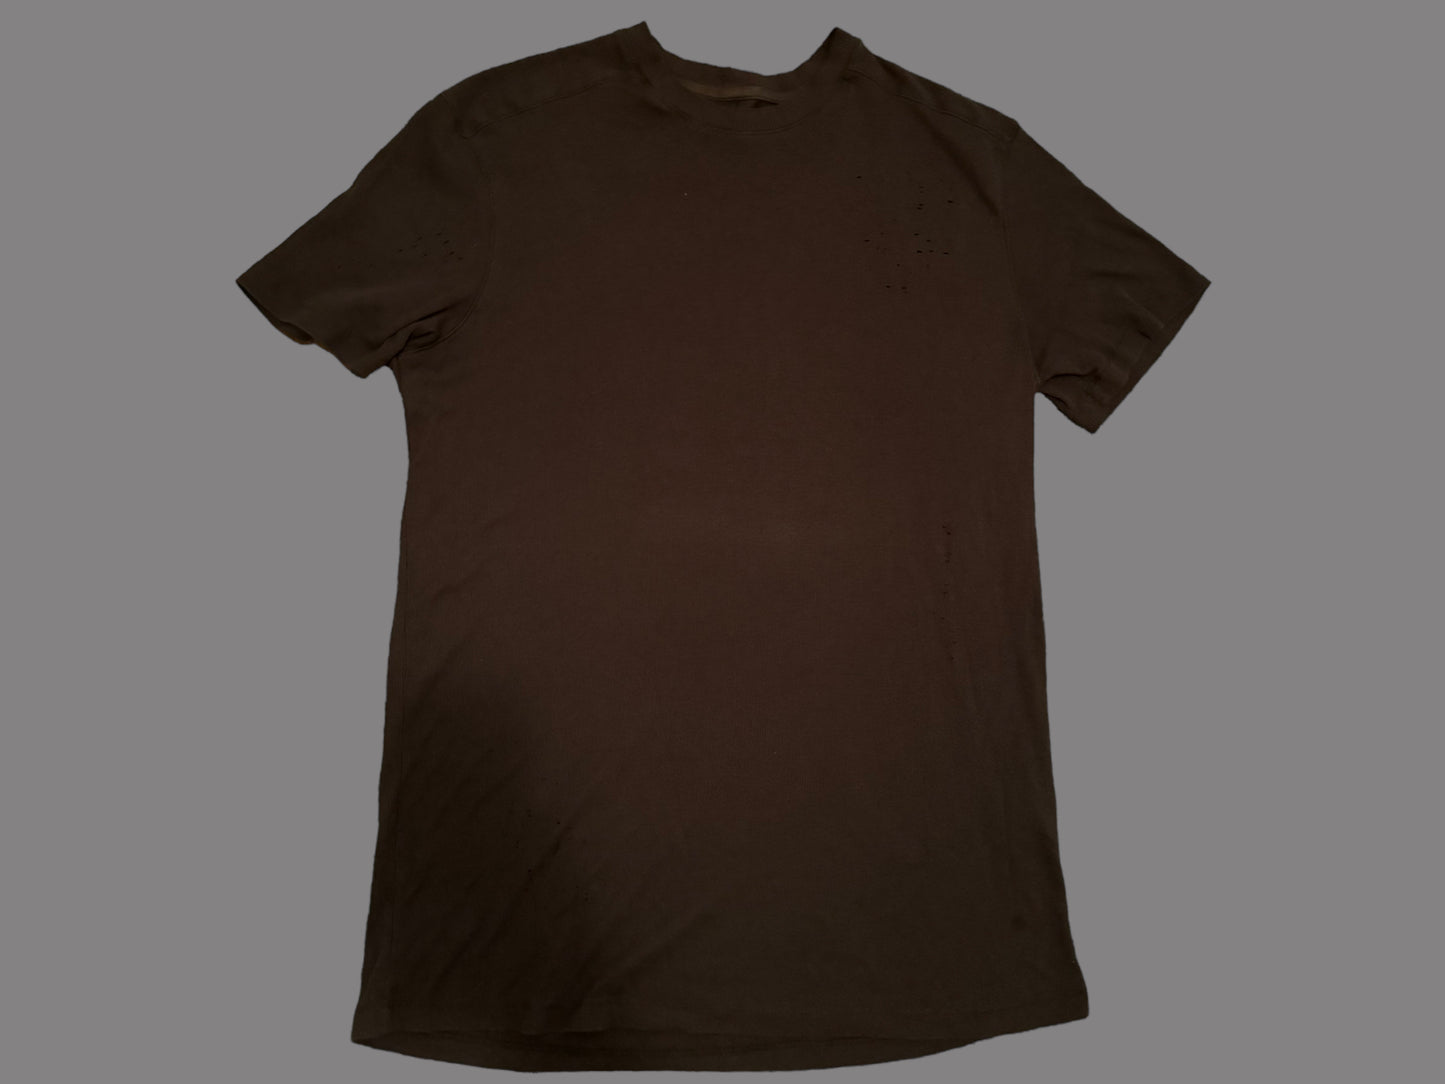 mens ALL SAINTS brown distressed t-shirt size medium